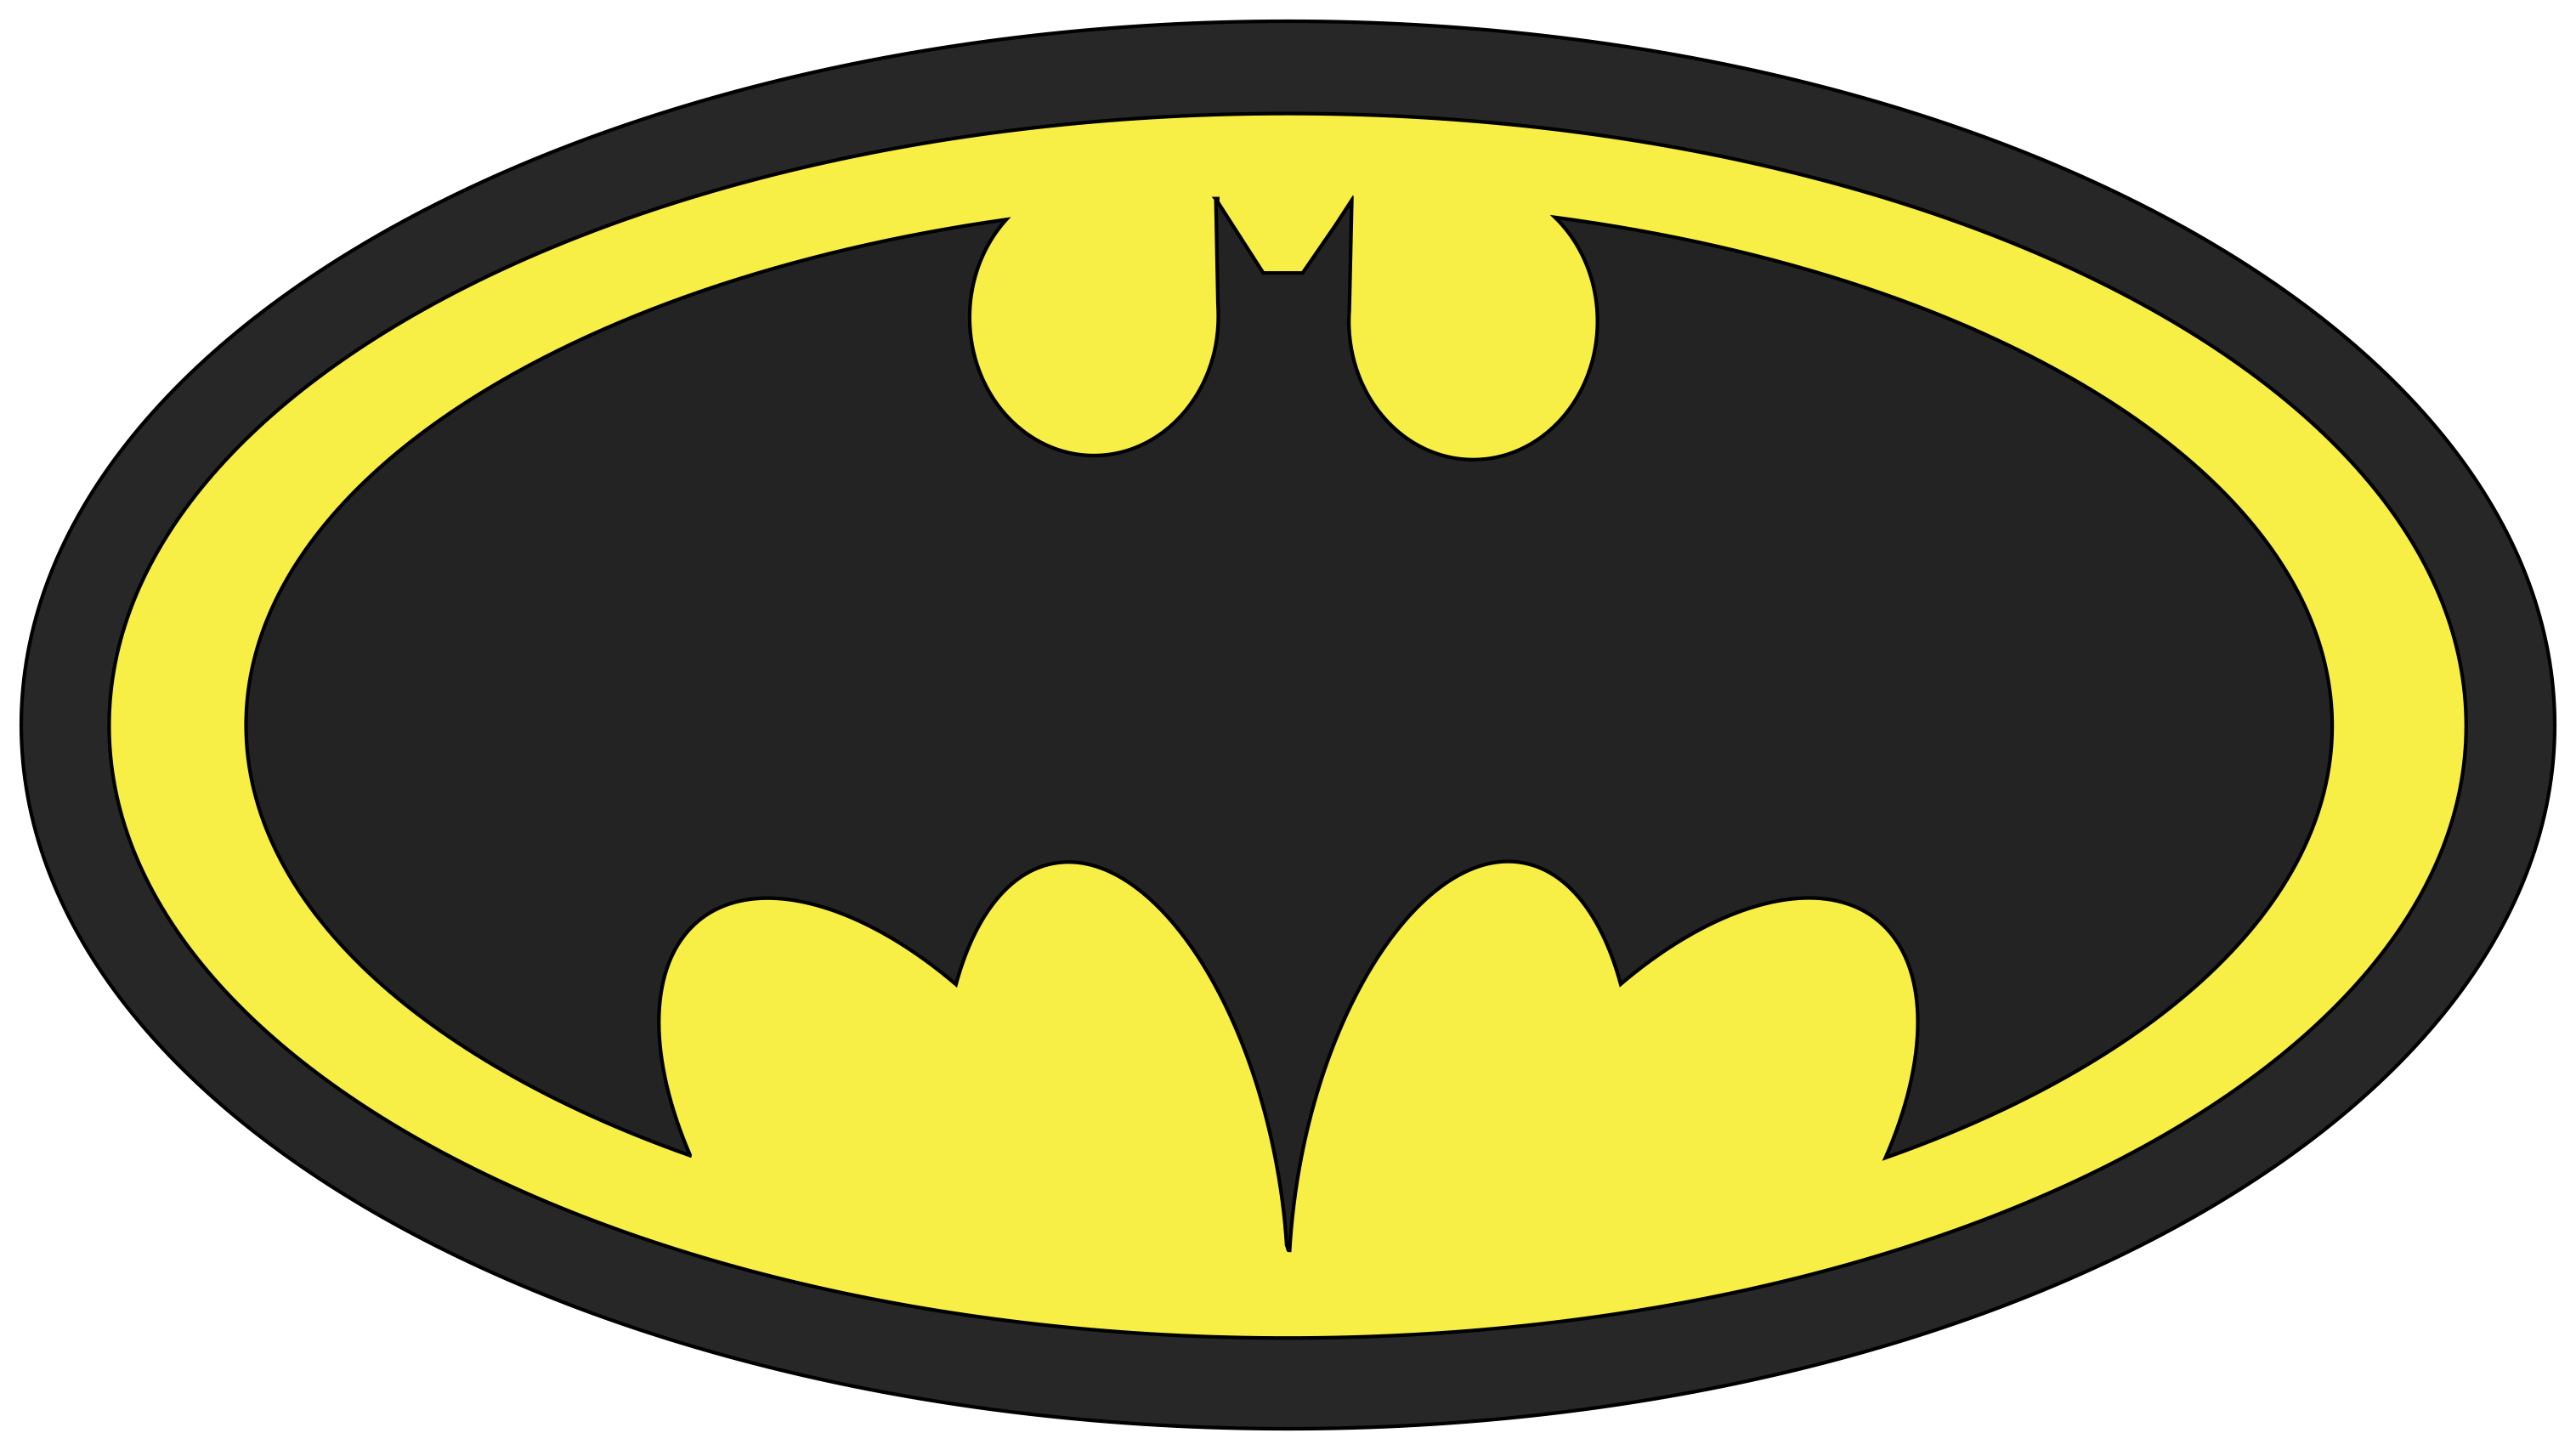 Free Batman Insignia Template, Download Free Clip Art, Free Clip Art on